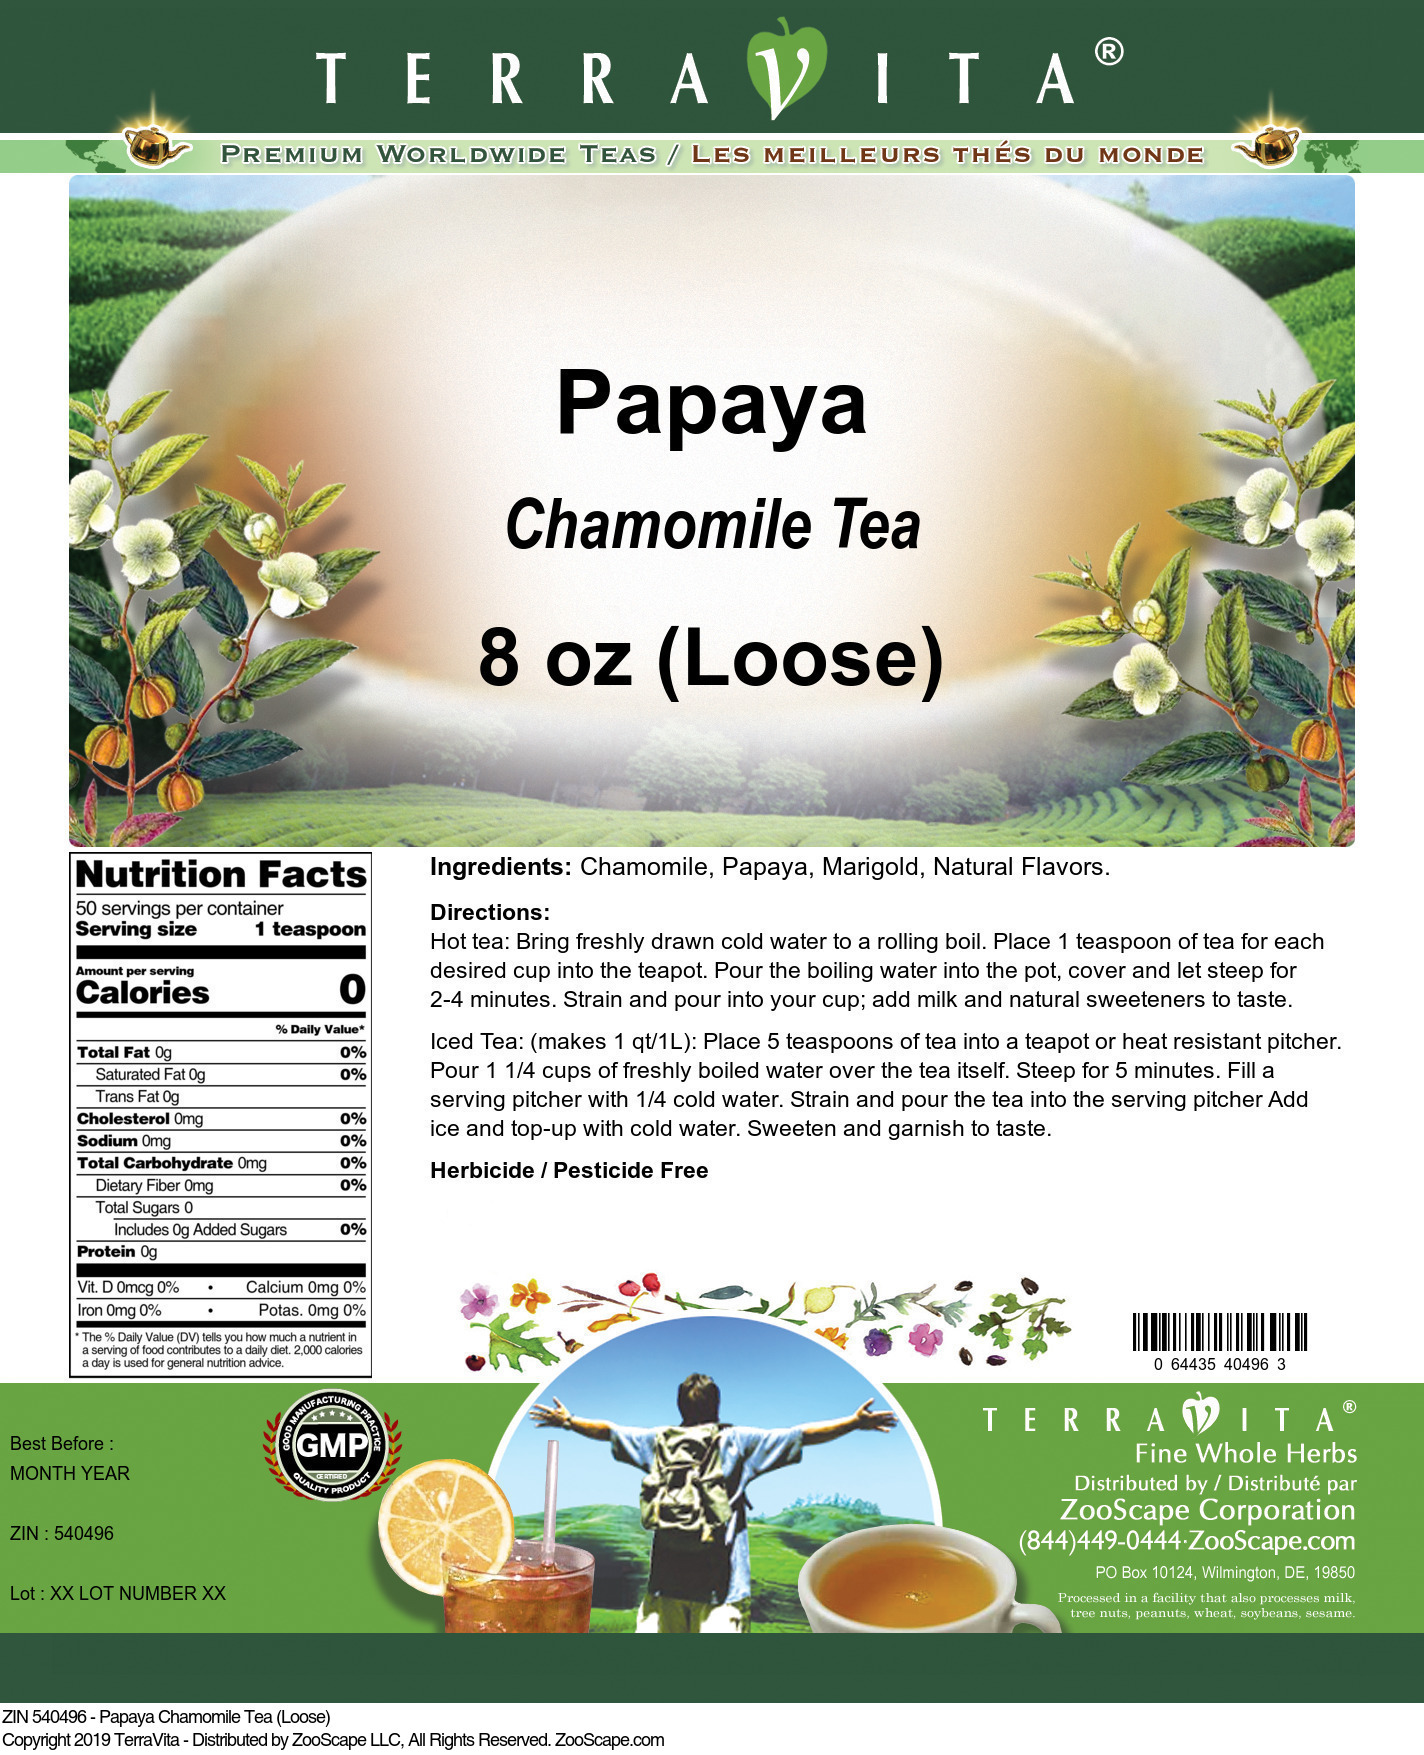 Papaya Chamomile Tea (Loose) - Label